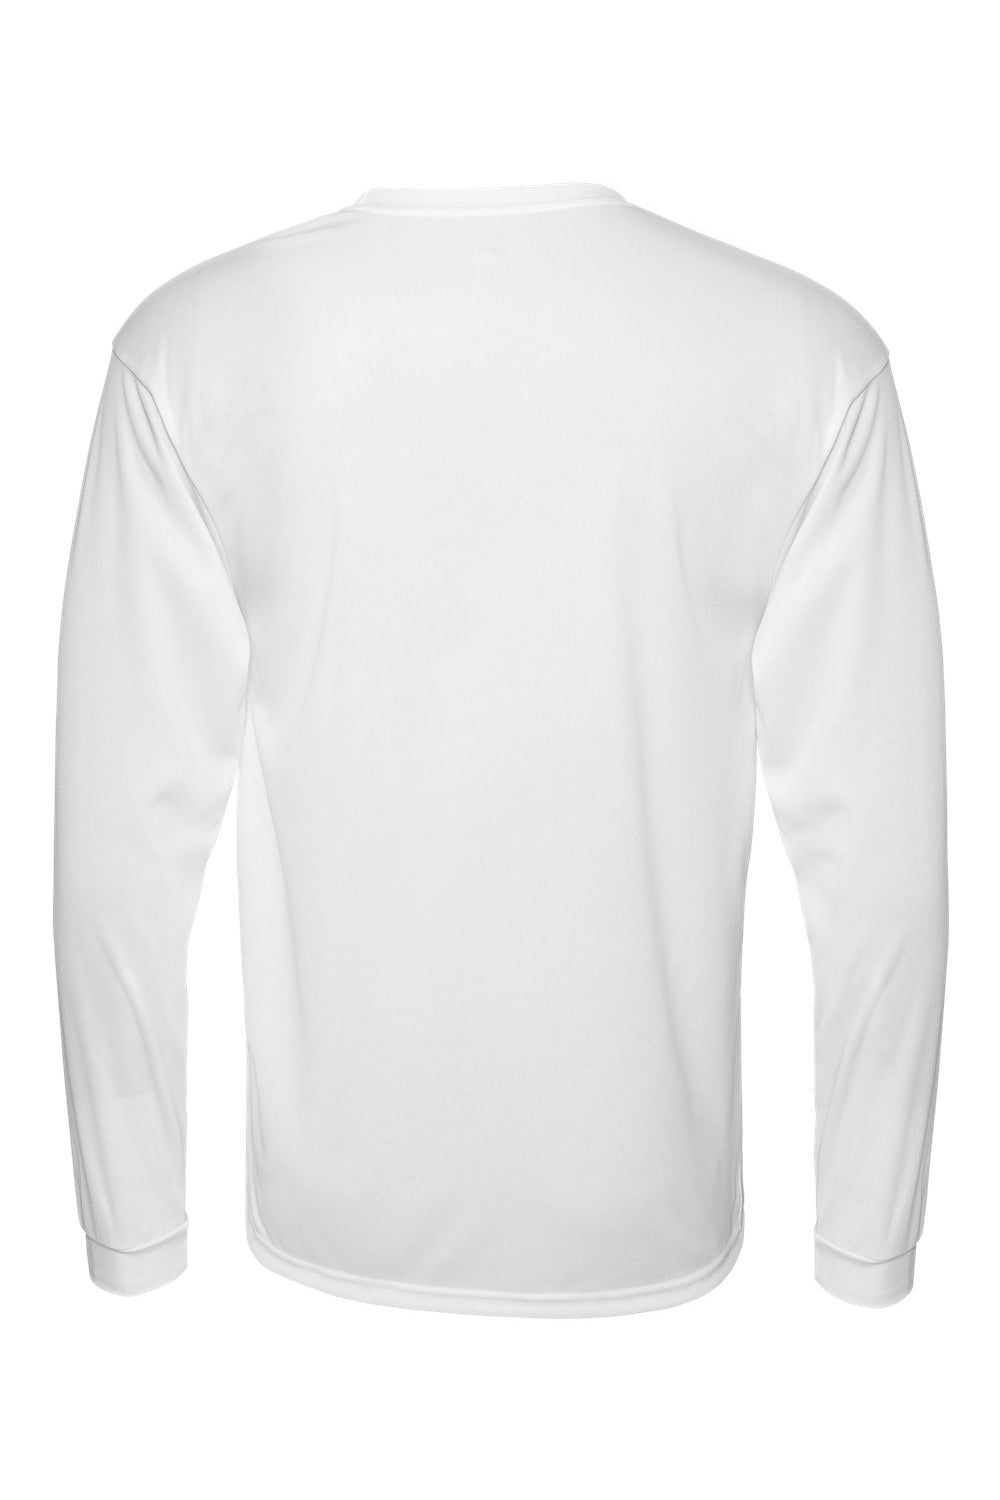 C2 Sport 5104 Mens Performance Moisture Wicking Long Sleeve Crewneck T-Shirt White Flat Back